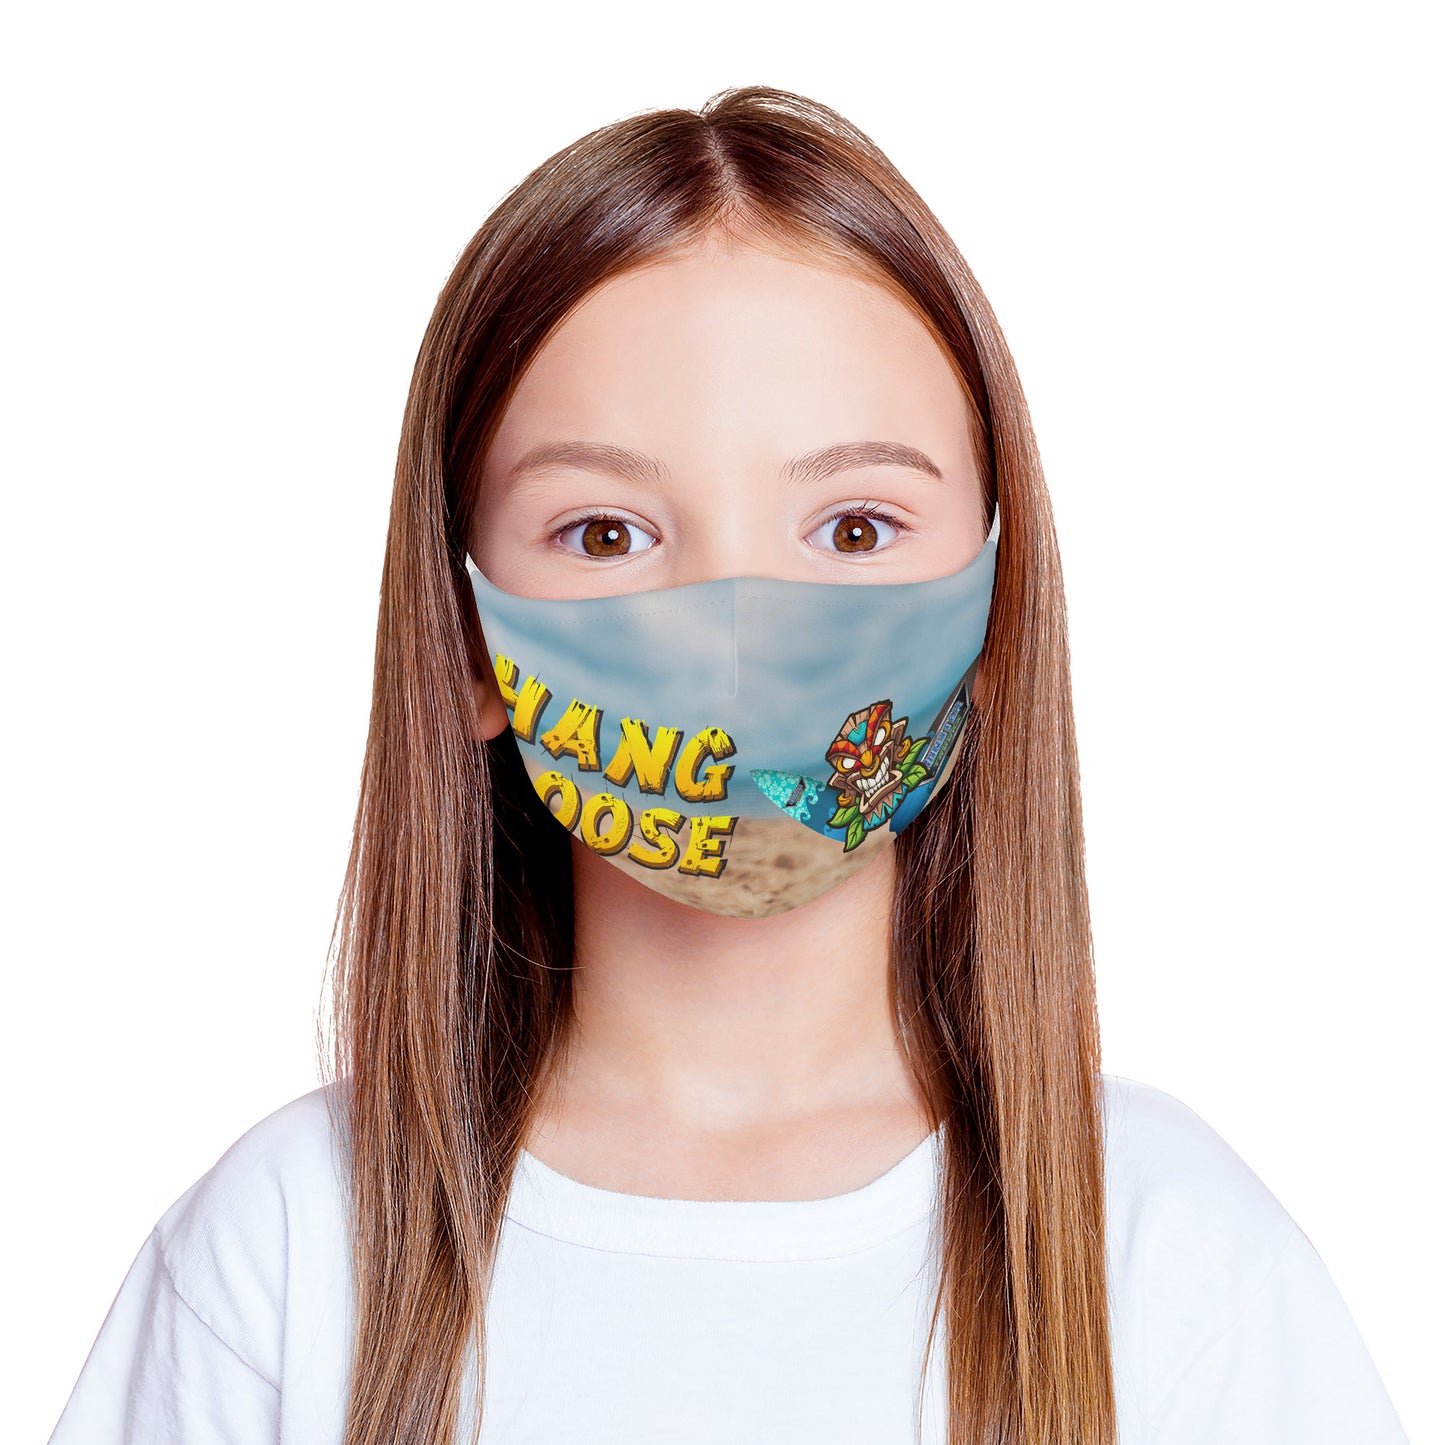 Hang Loose Kids Respirator Mask